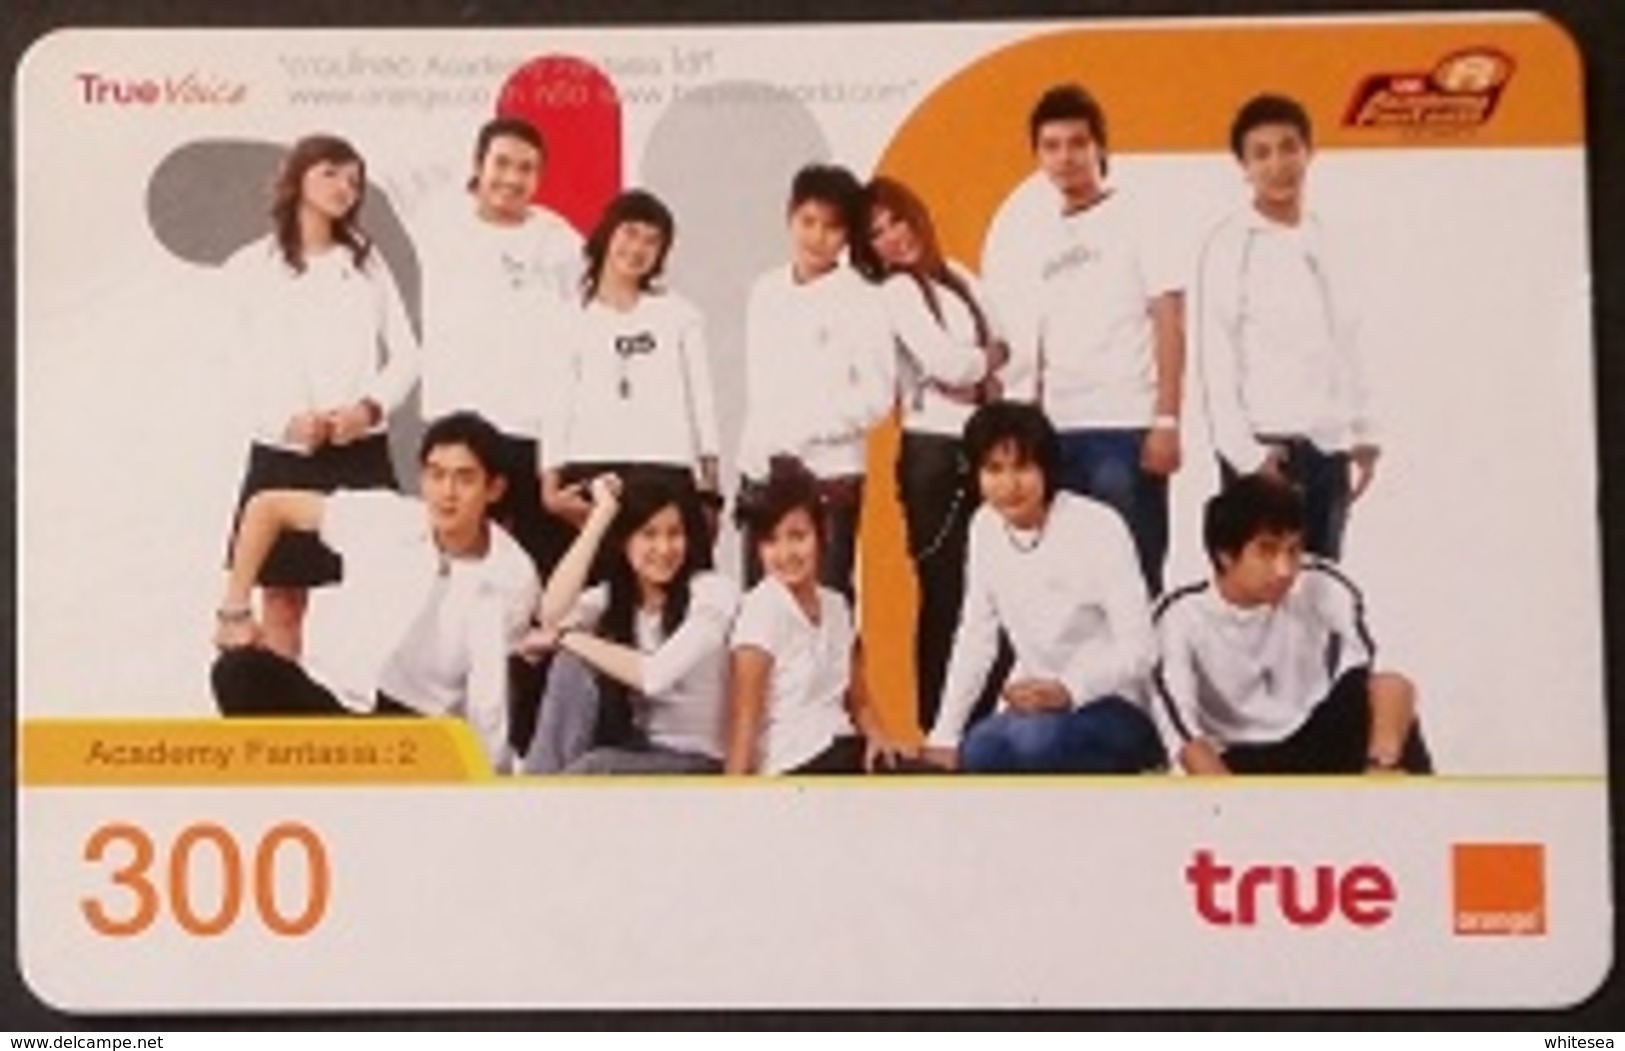 Mobilecard Thailand - True / Orange - Musik - Academy Fantasia 2 (2) - Thaïland